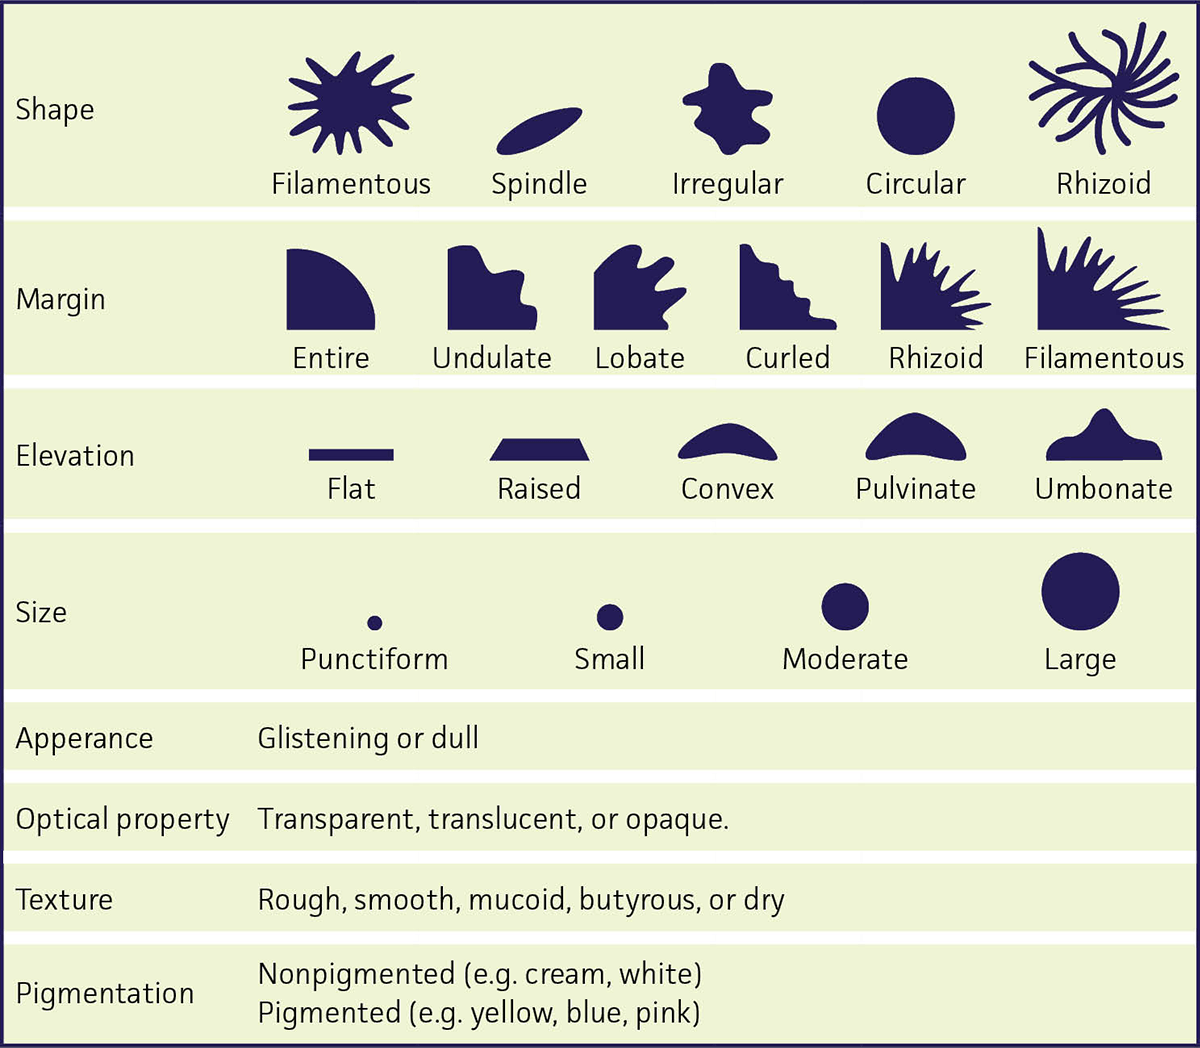 Colony Morphology